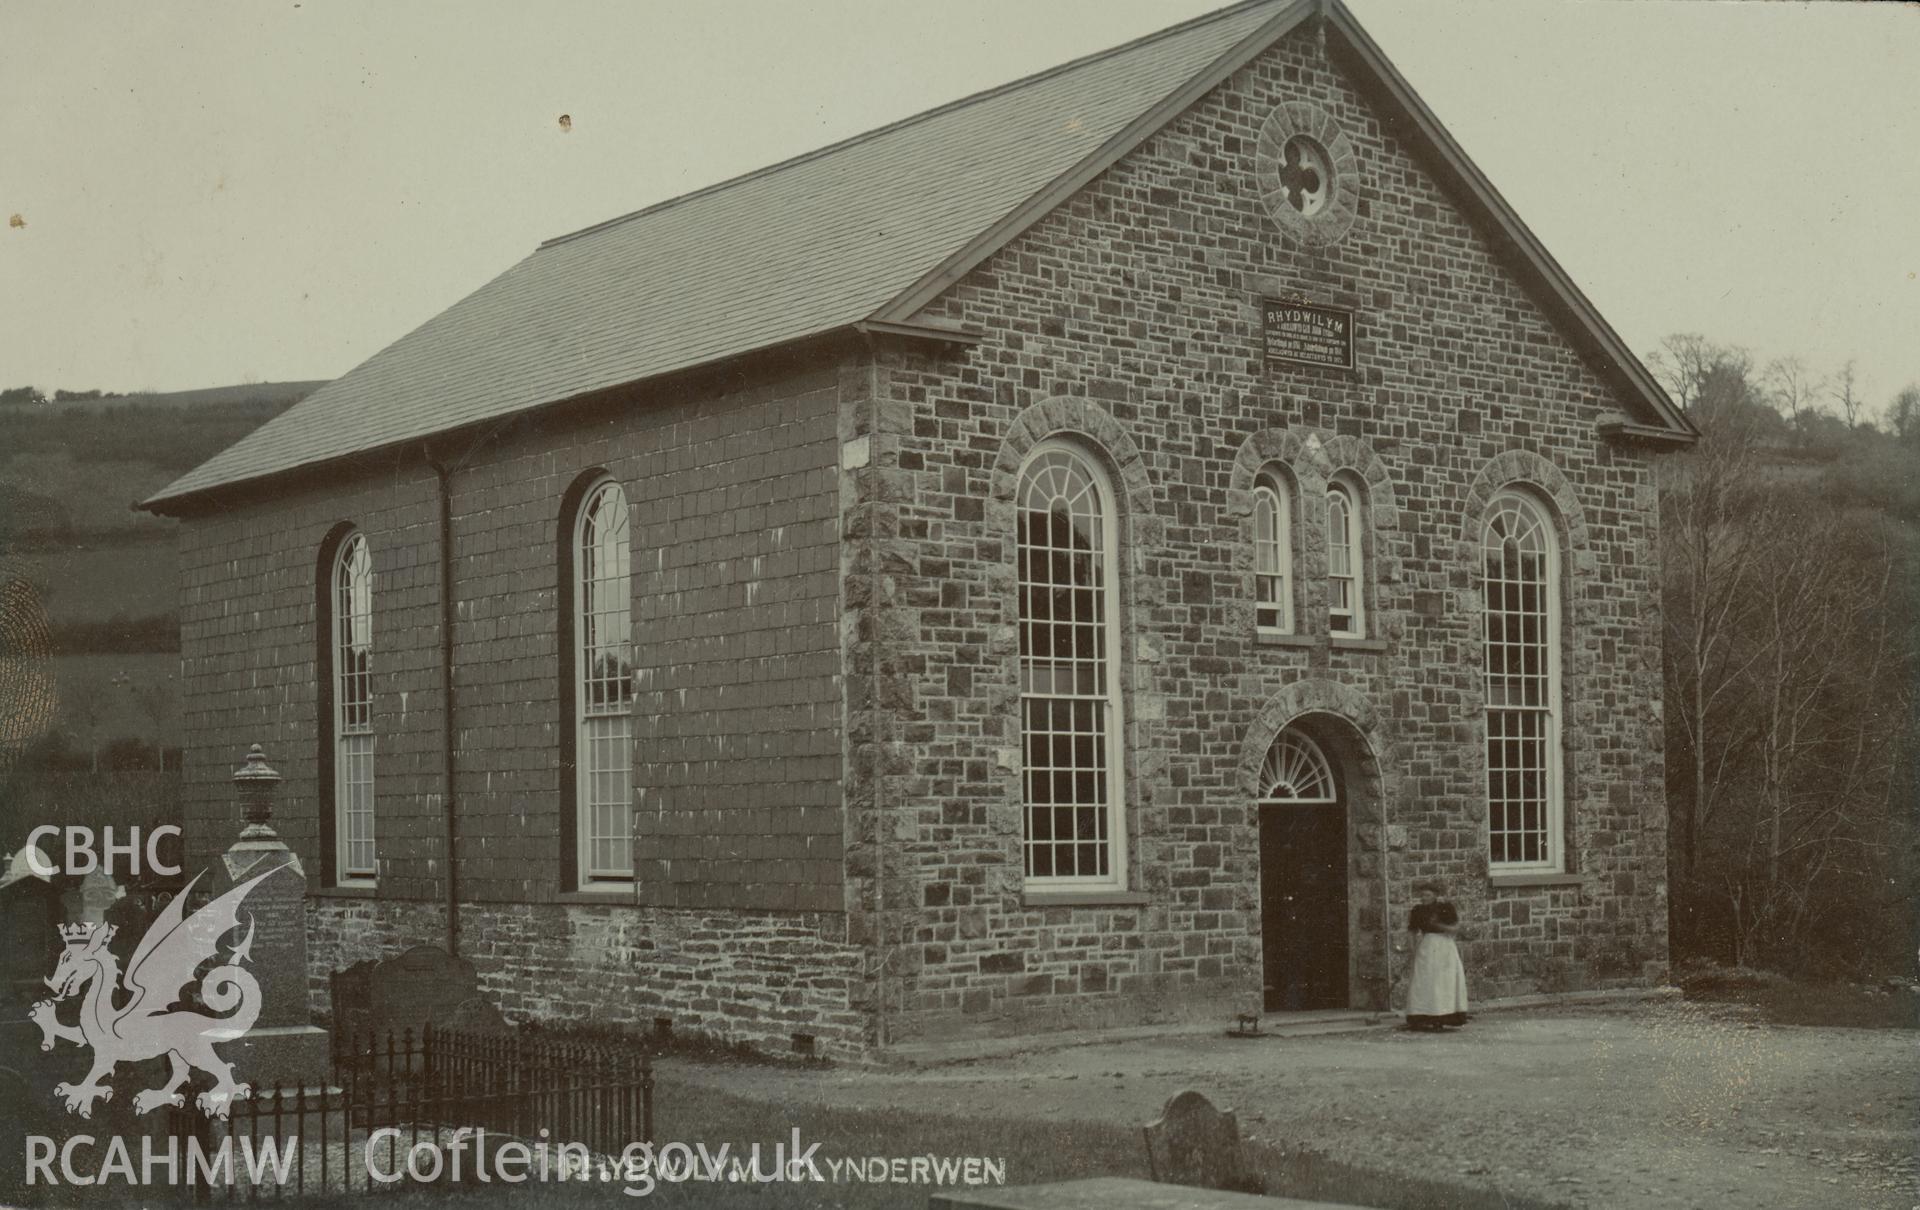 Digital copy of monochrome postcard showing exterior view of Rhydwilym Baptist Church, Clynderwen. Loaned for copying by Thomas Lloyd.